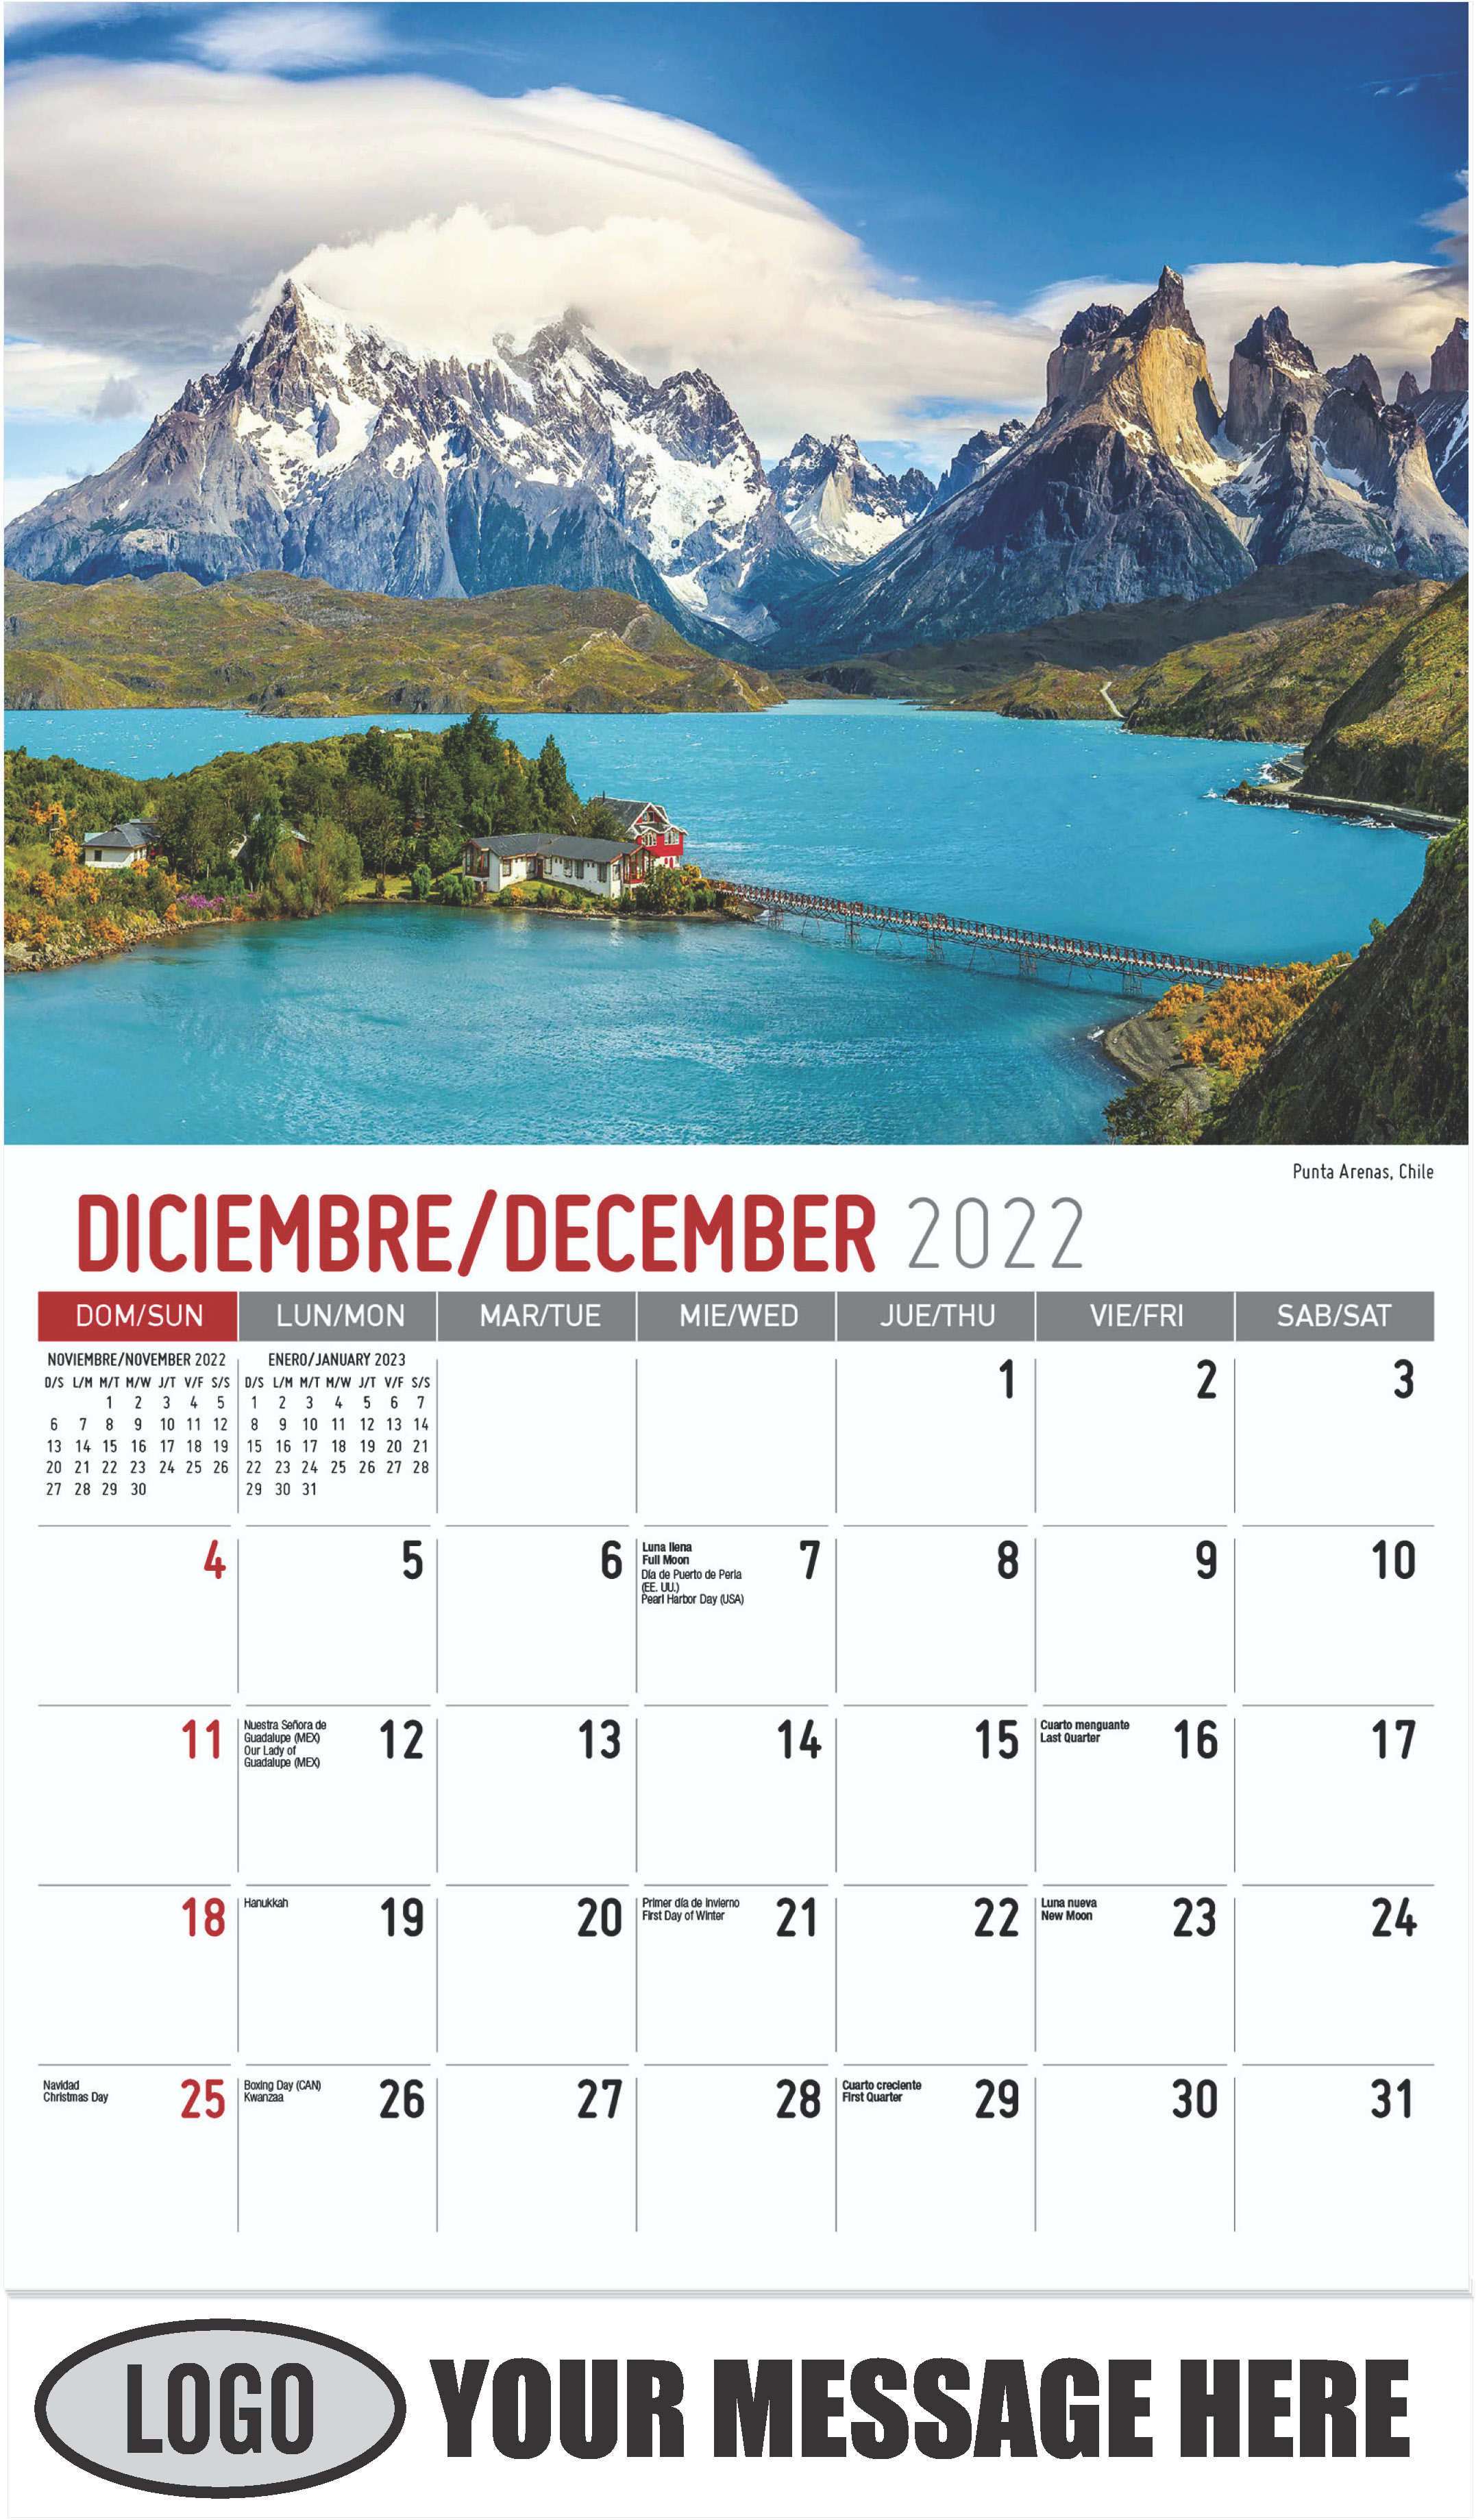 Punta Arenas, Chile - December 2022 - Beauty of Latin America 2023 Promotional Calendar